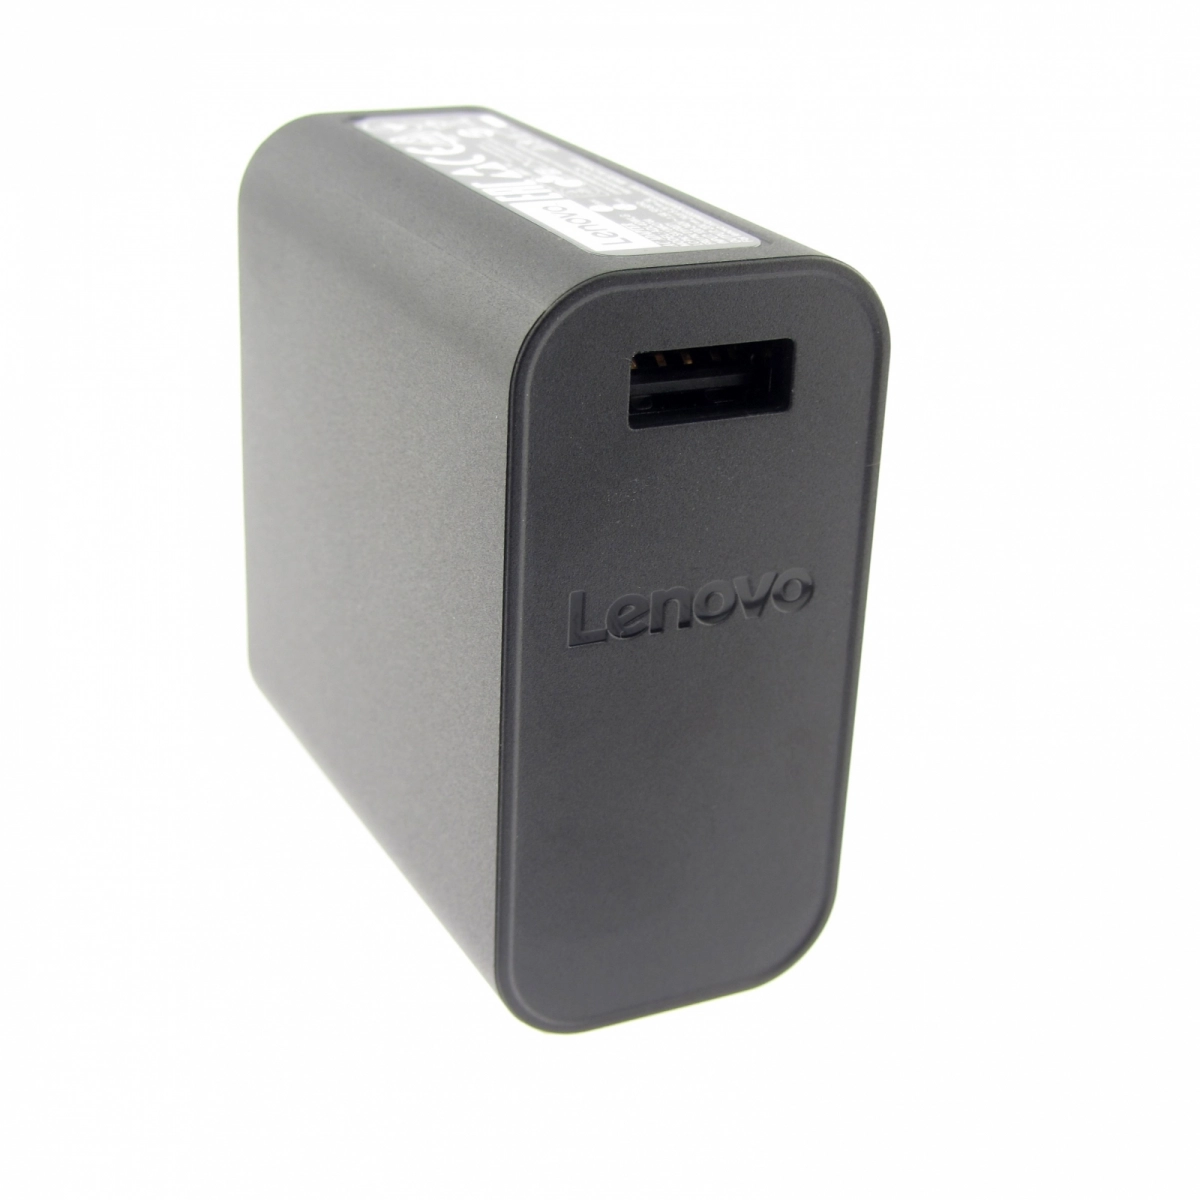 Original Netzteil für LENOVO ADL40WCD 36200582, 20V, 2A, Stecker USB, ohne USB-Kabel